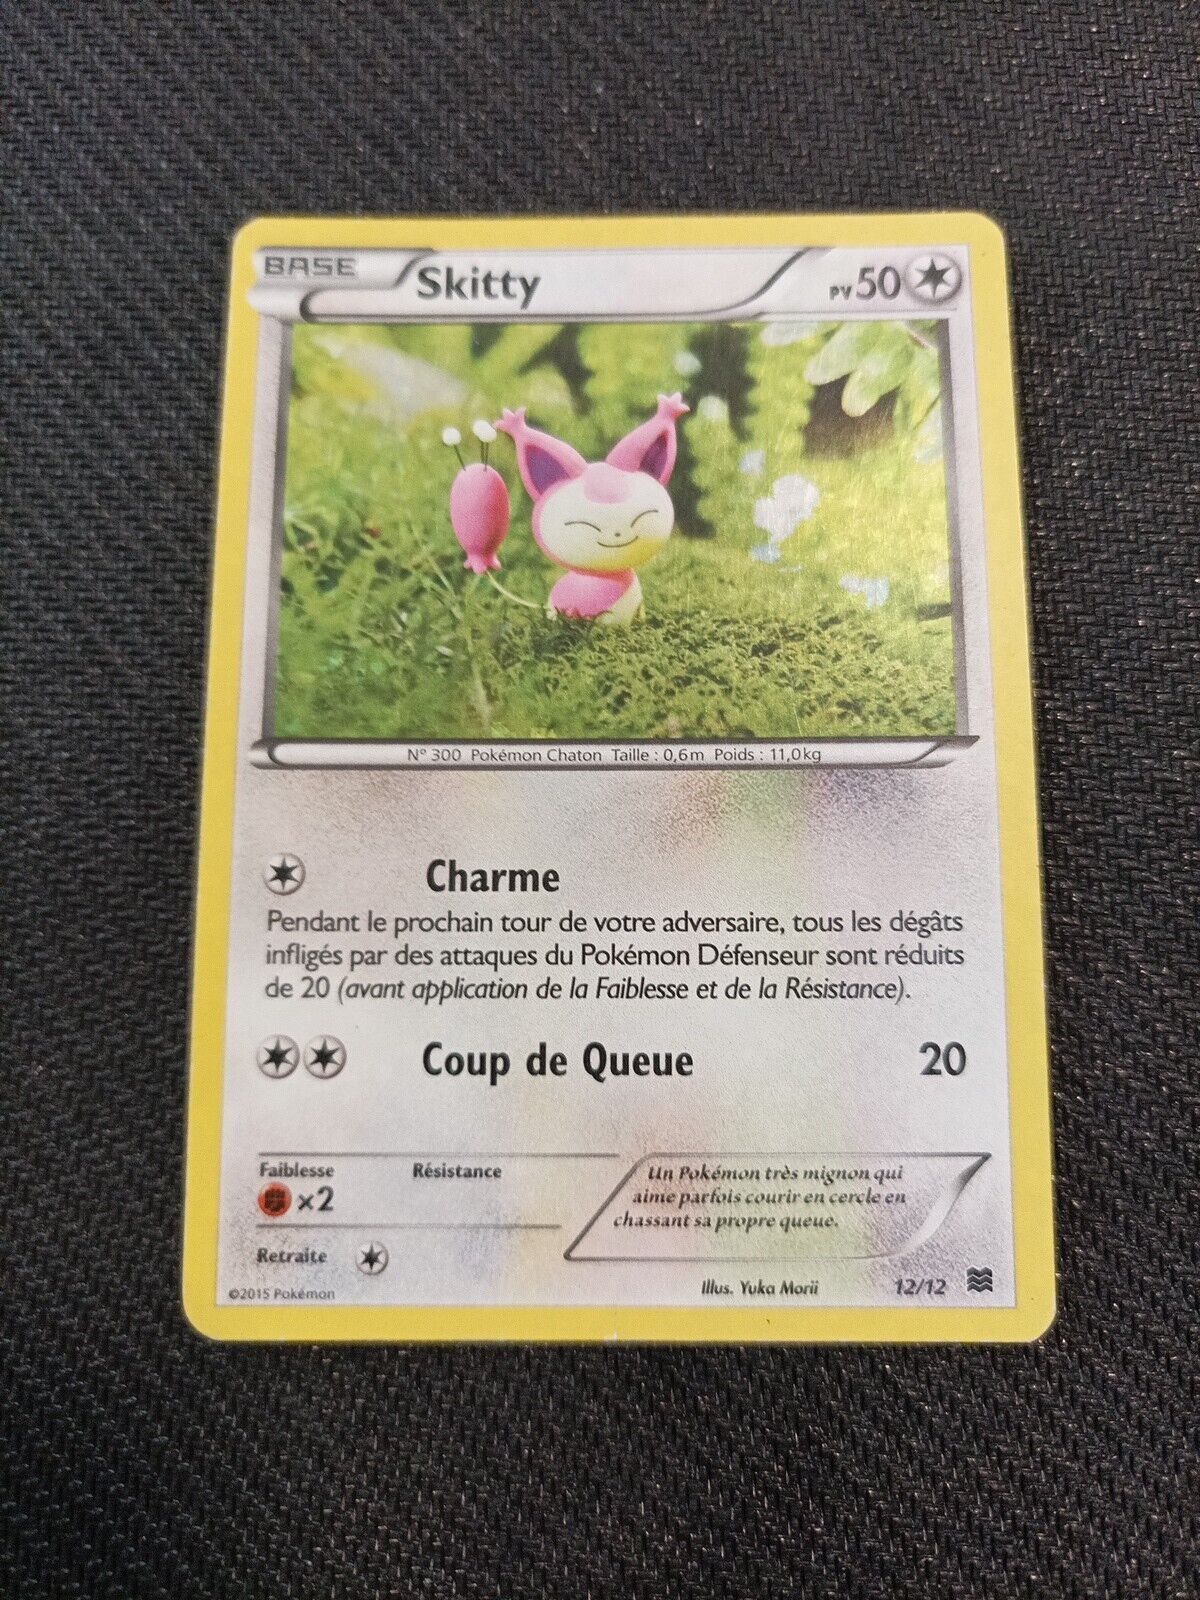 2015 Pokemon Card Skitty 12/12 Holo Macdonald